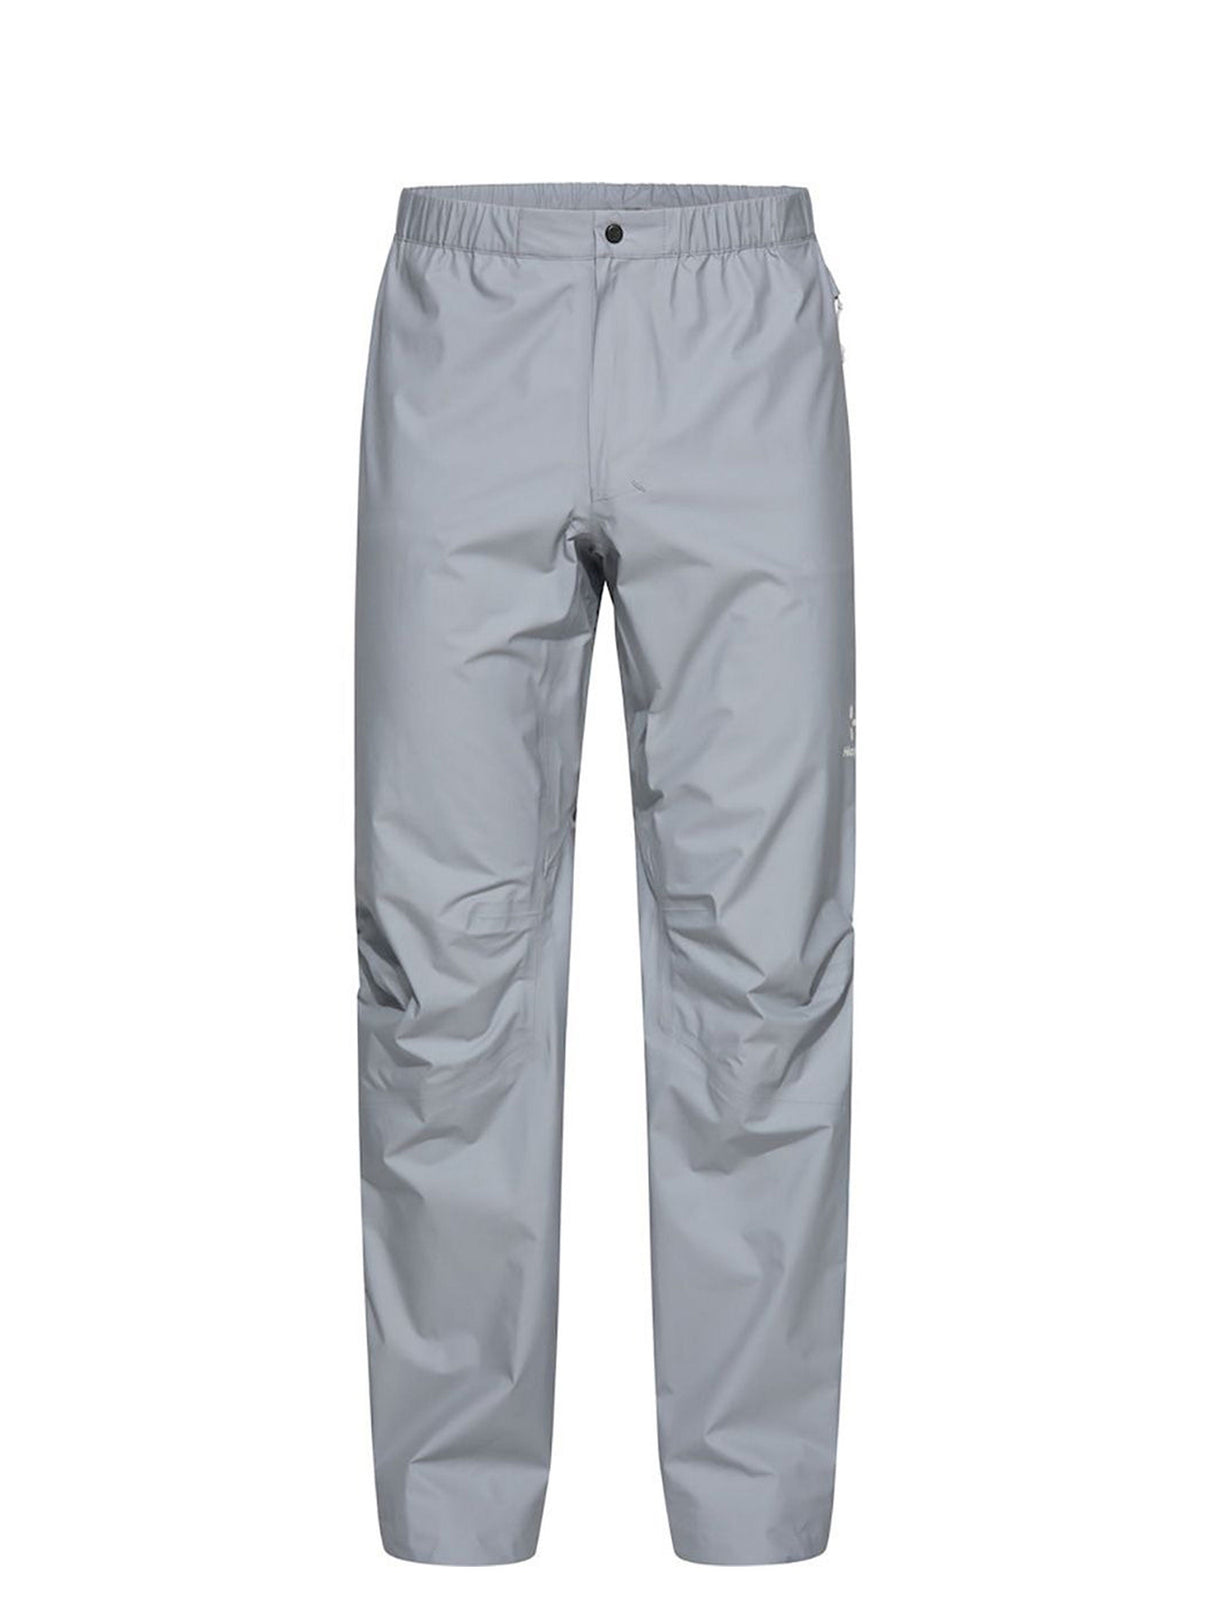 Image for Men's Sickline Ski Pant,Light Grey